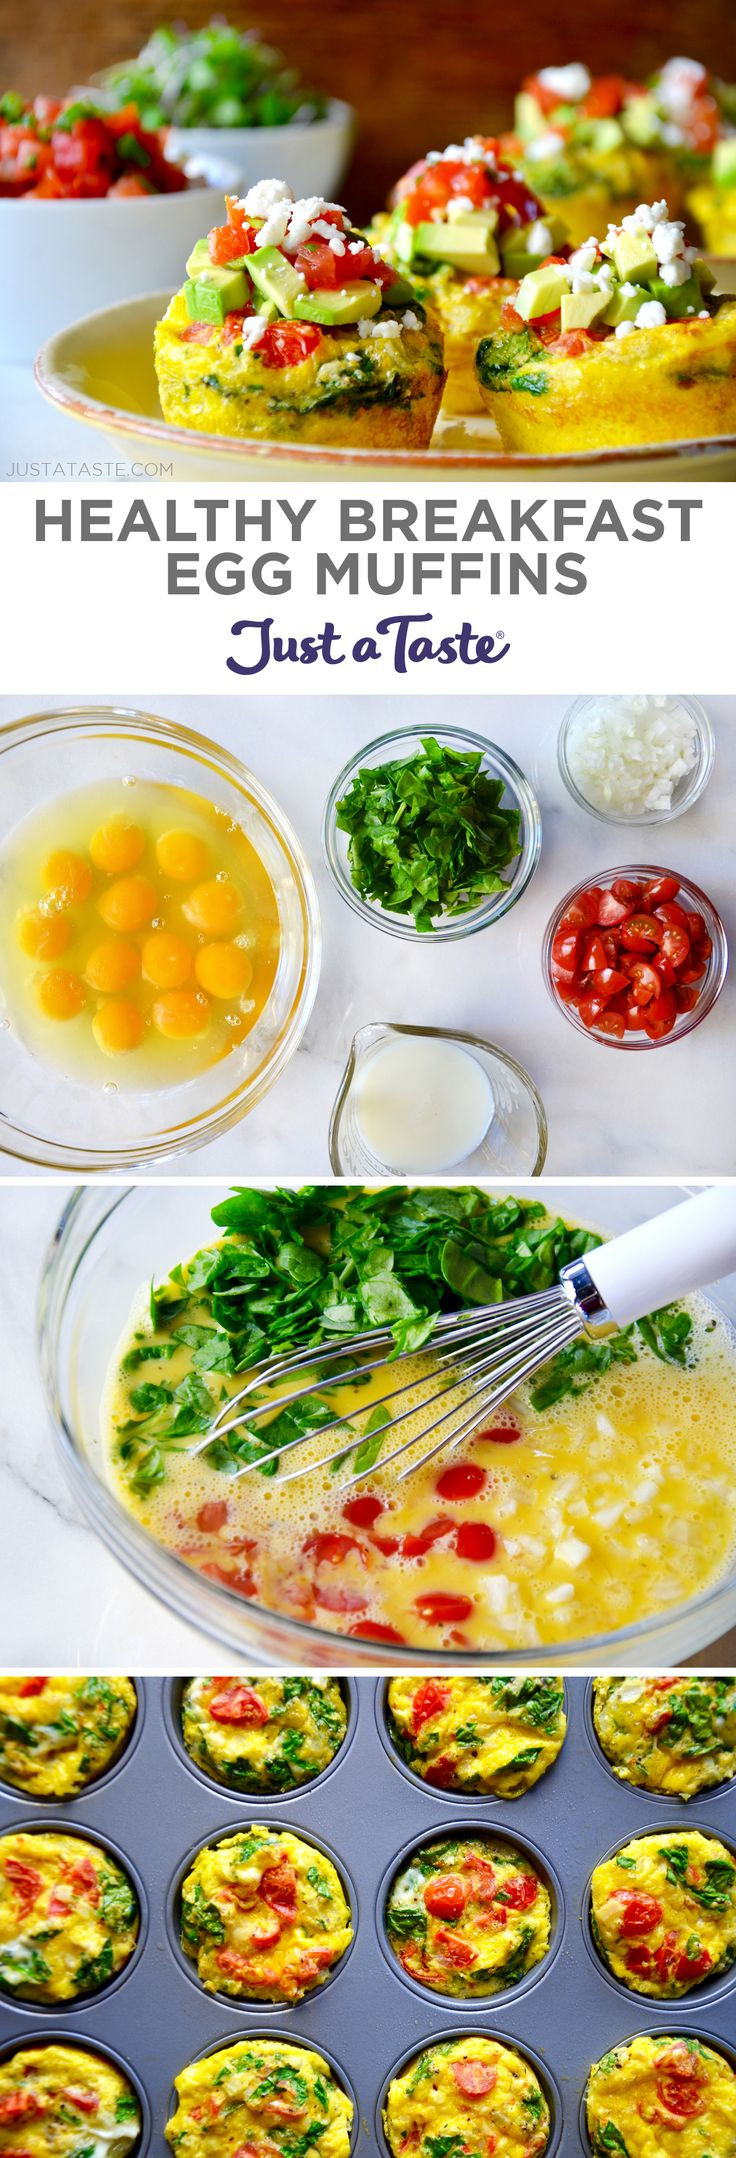 Are Eggs A Healthy Breakfast
 25 best ideas about Healthy breakfasts on Pinterest